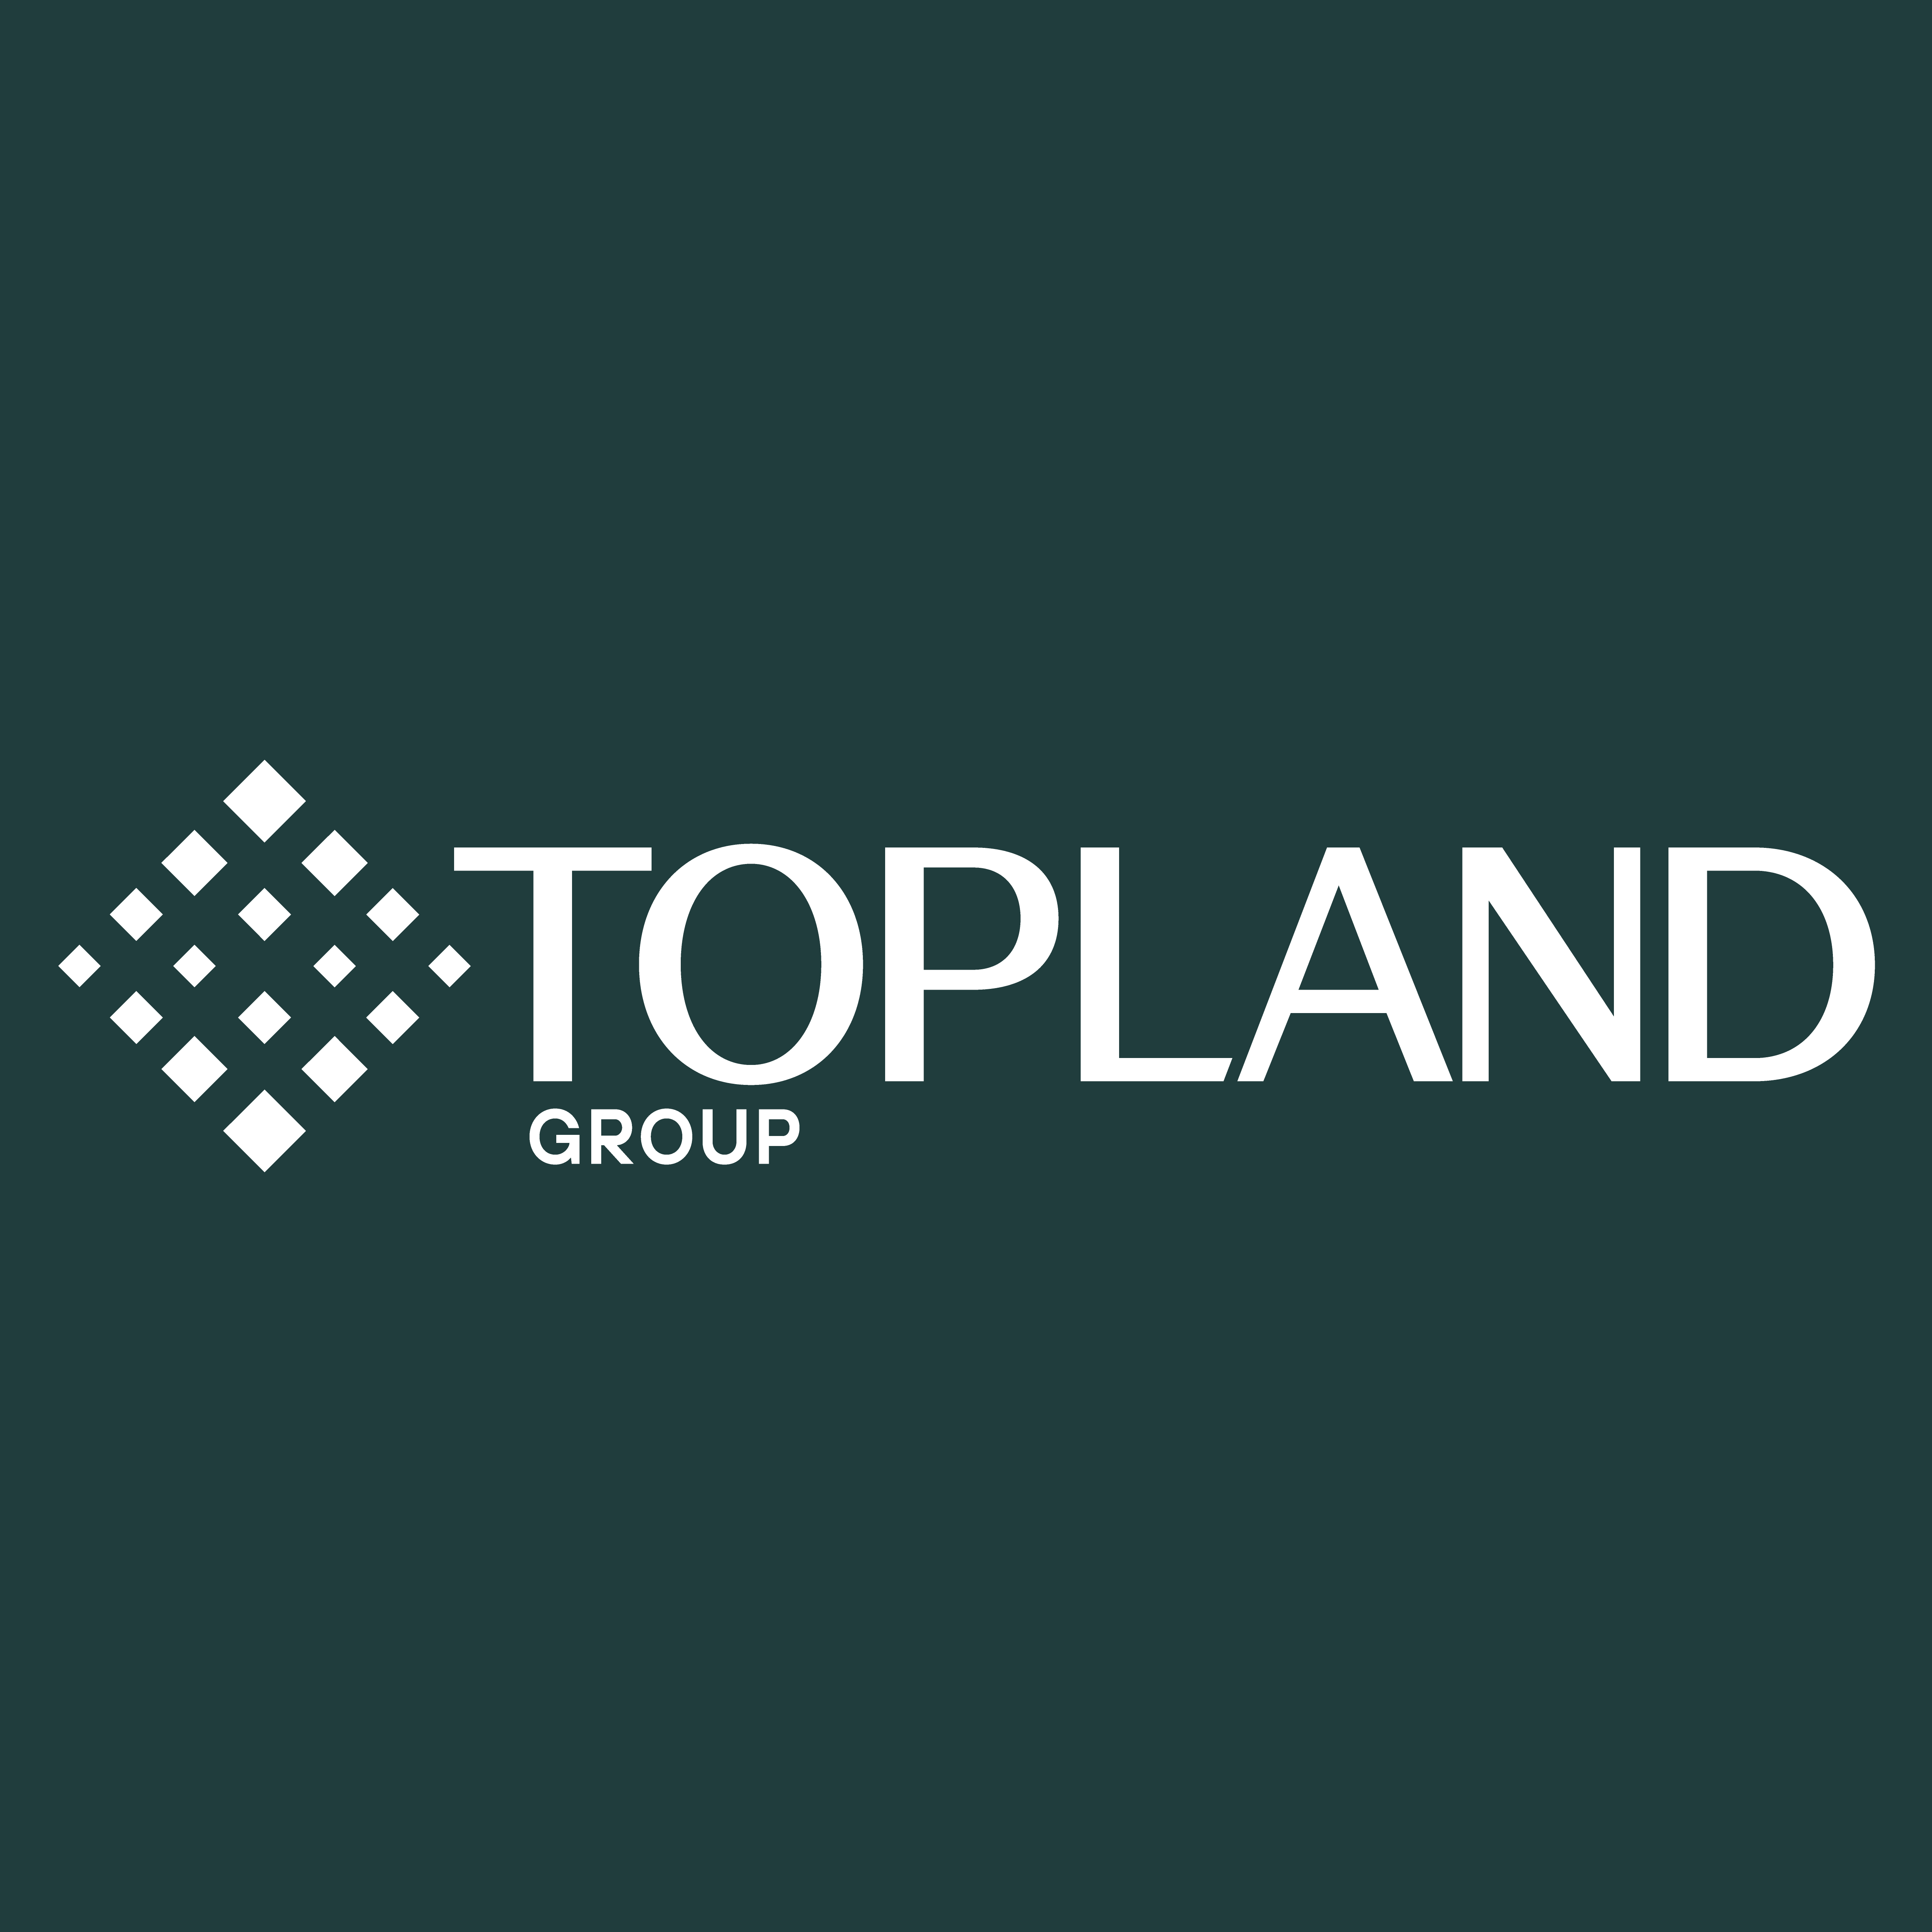 Topland logo